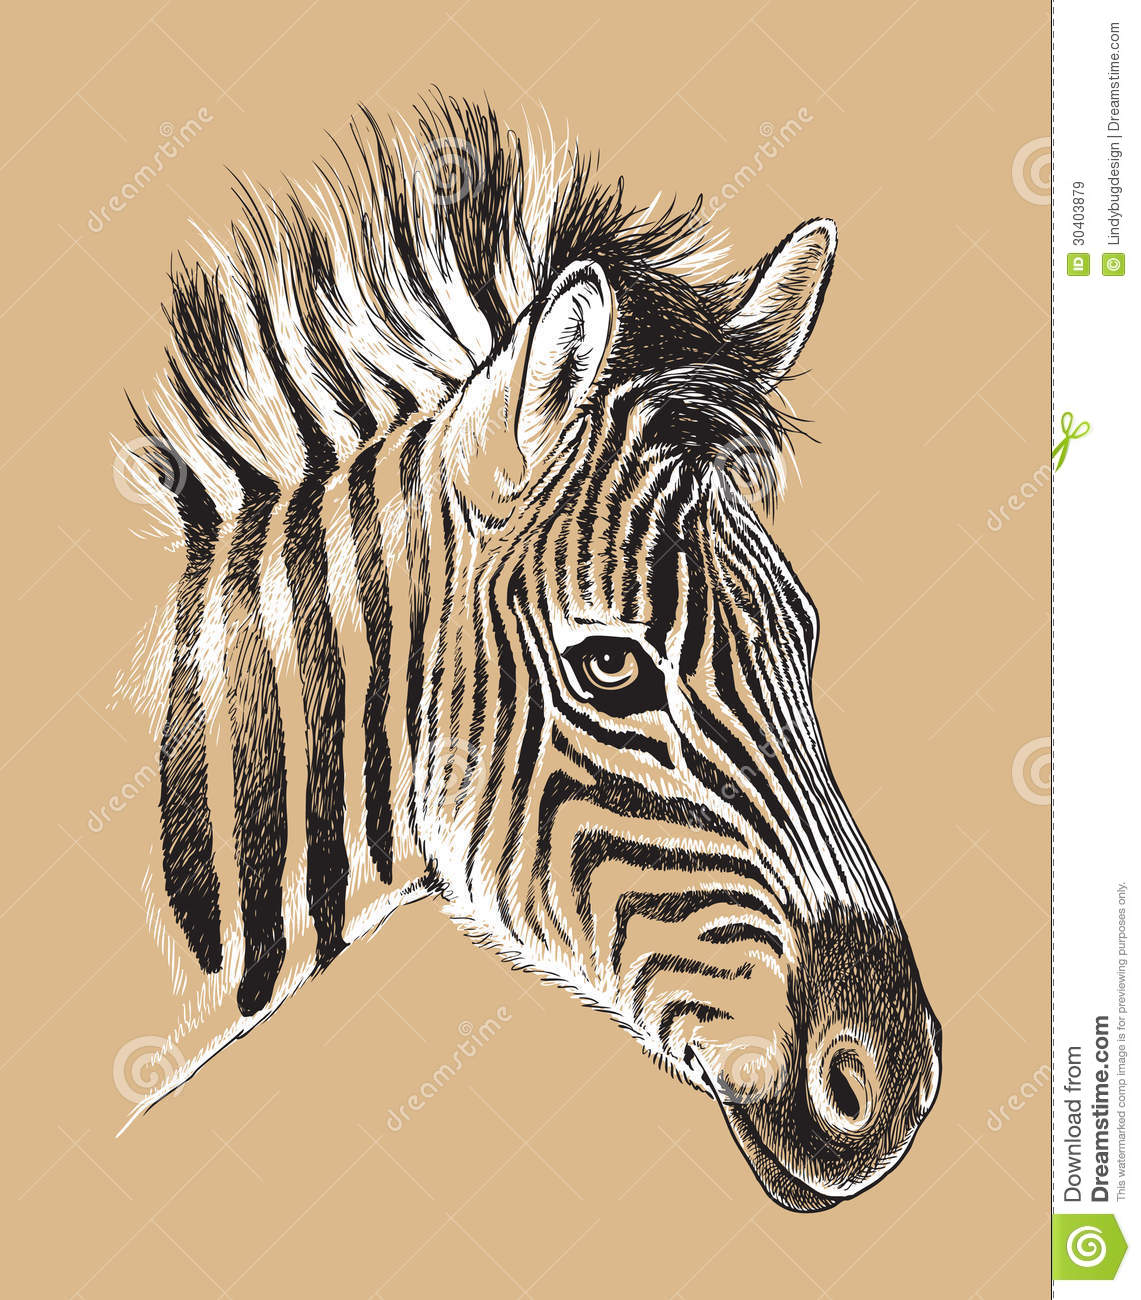 Black and White Zebra Face Sketch